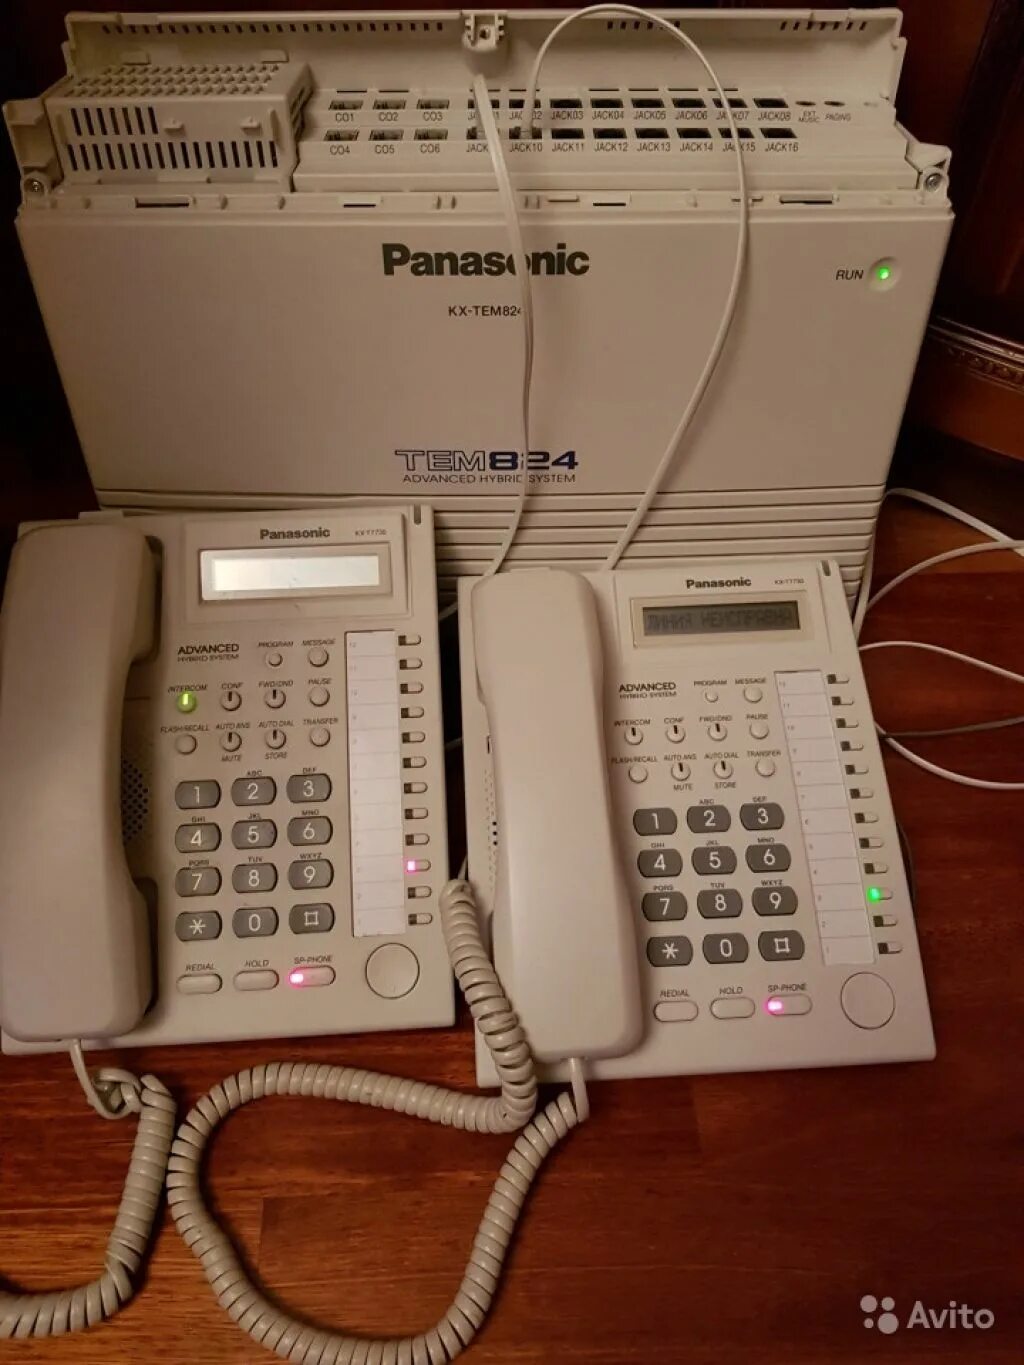 Мини атс panasonic kx. АТС Panasonic KX-tem824. АТС Панасоник 824. Panasonic KX-t7730. KX tem824 системный телефон.